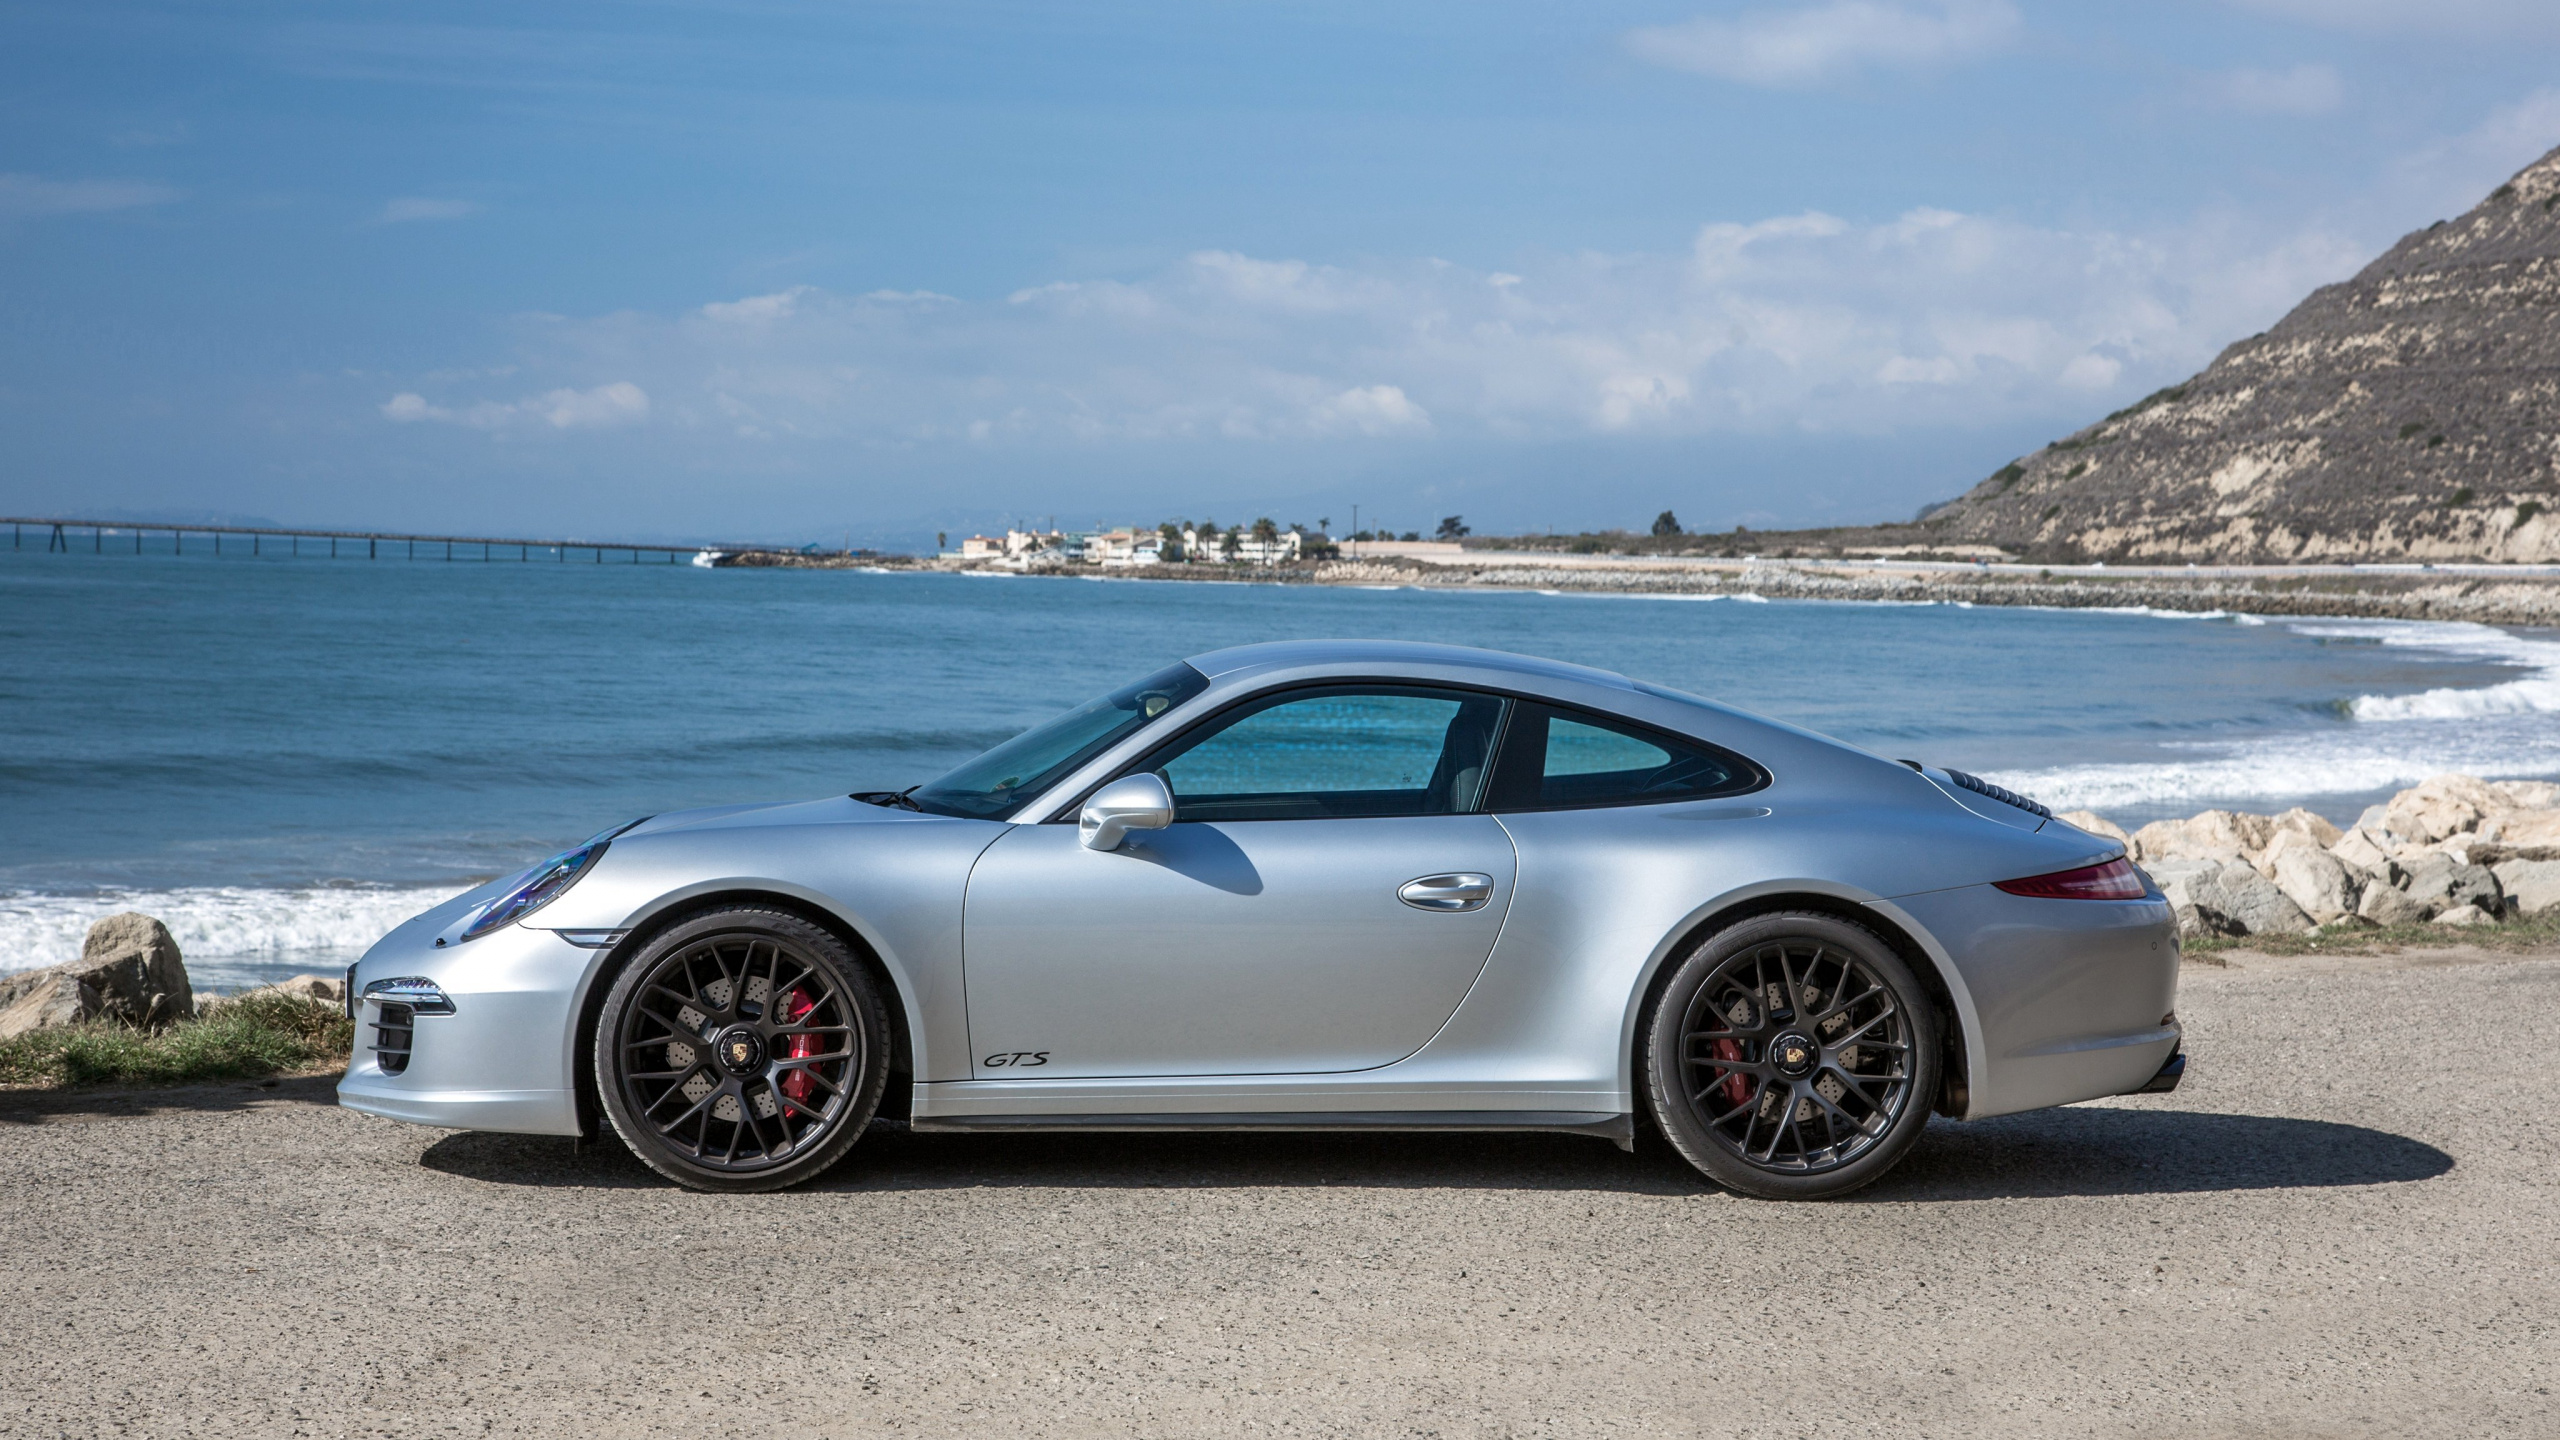 Silver Porsche 911 Parked on Seashore During Daytime. Wallpaper in 2560x1440 Resolution